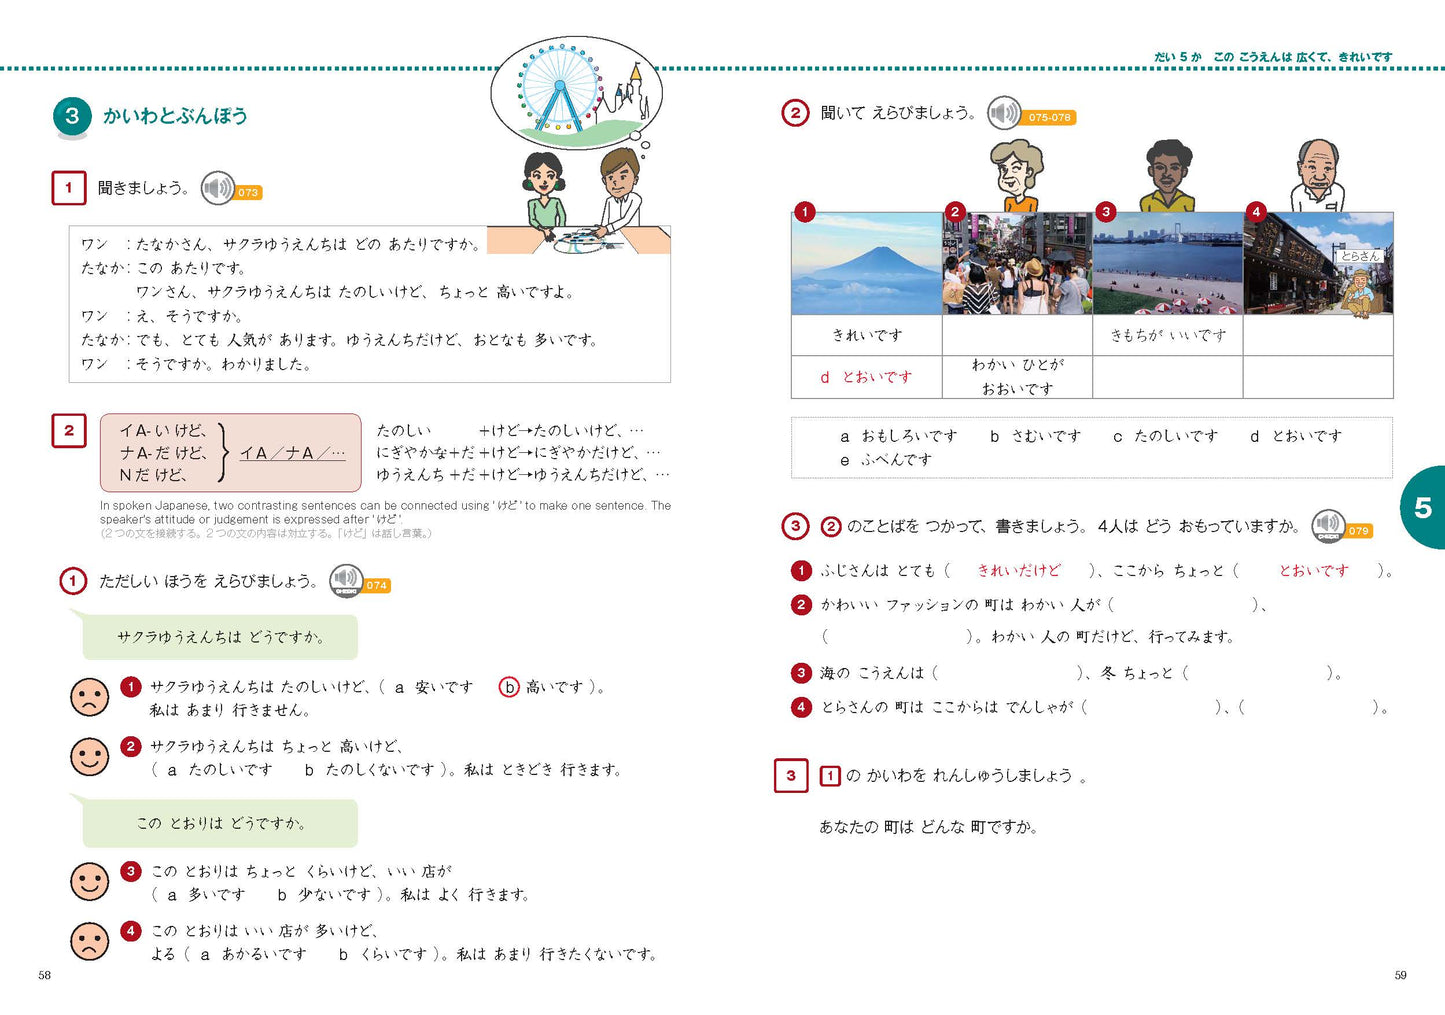 Marugoto: Japanese language and culture Elementary1 A2 Coursebook for communicative language competences "Rikai"